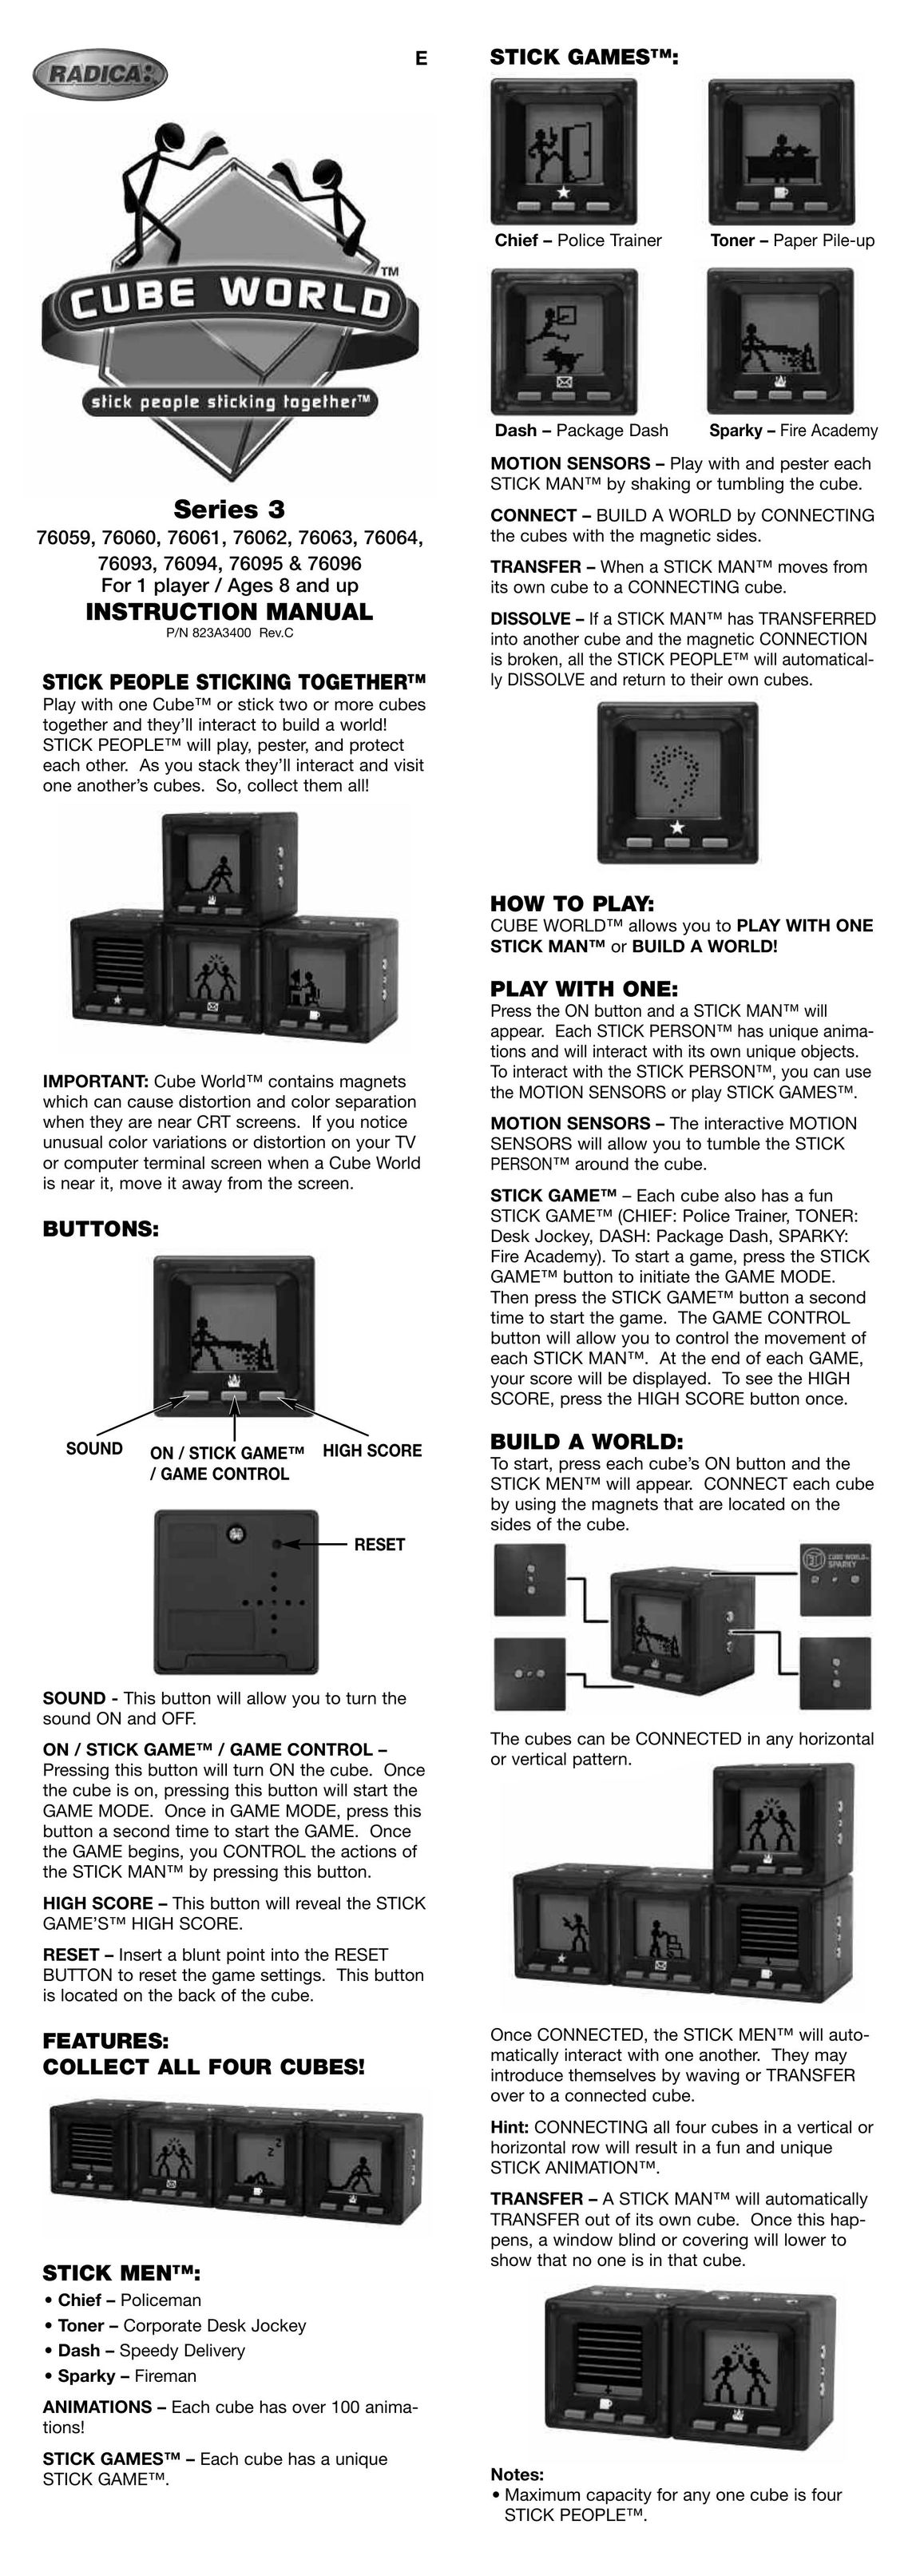 Radica Games 76094 Handheld Game System User Manual